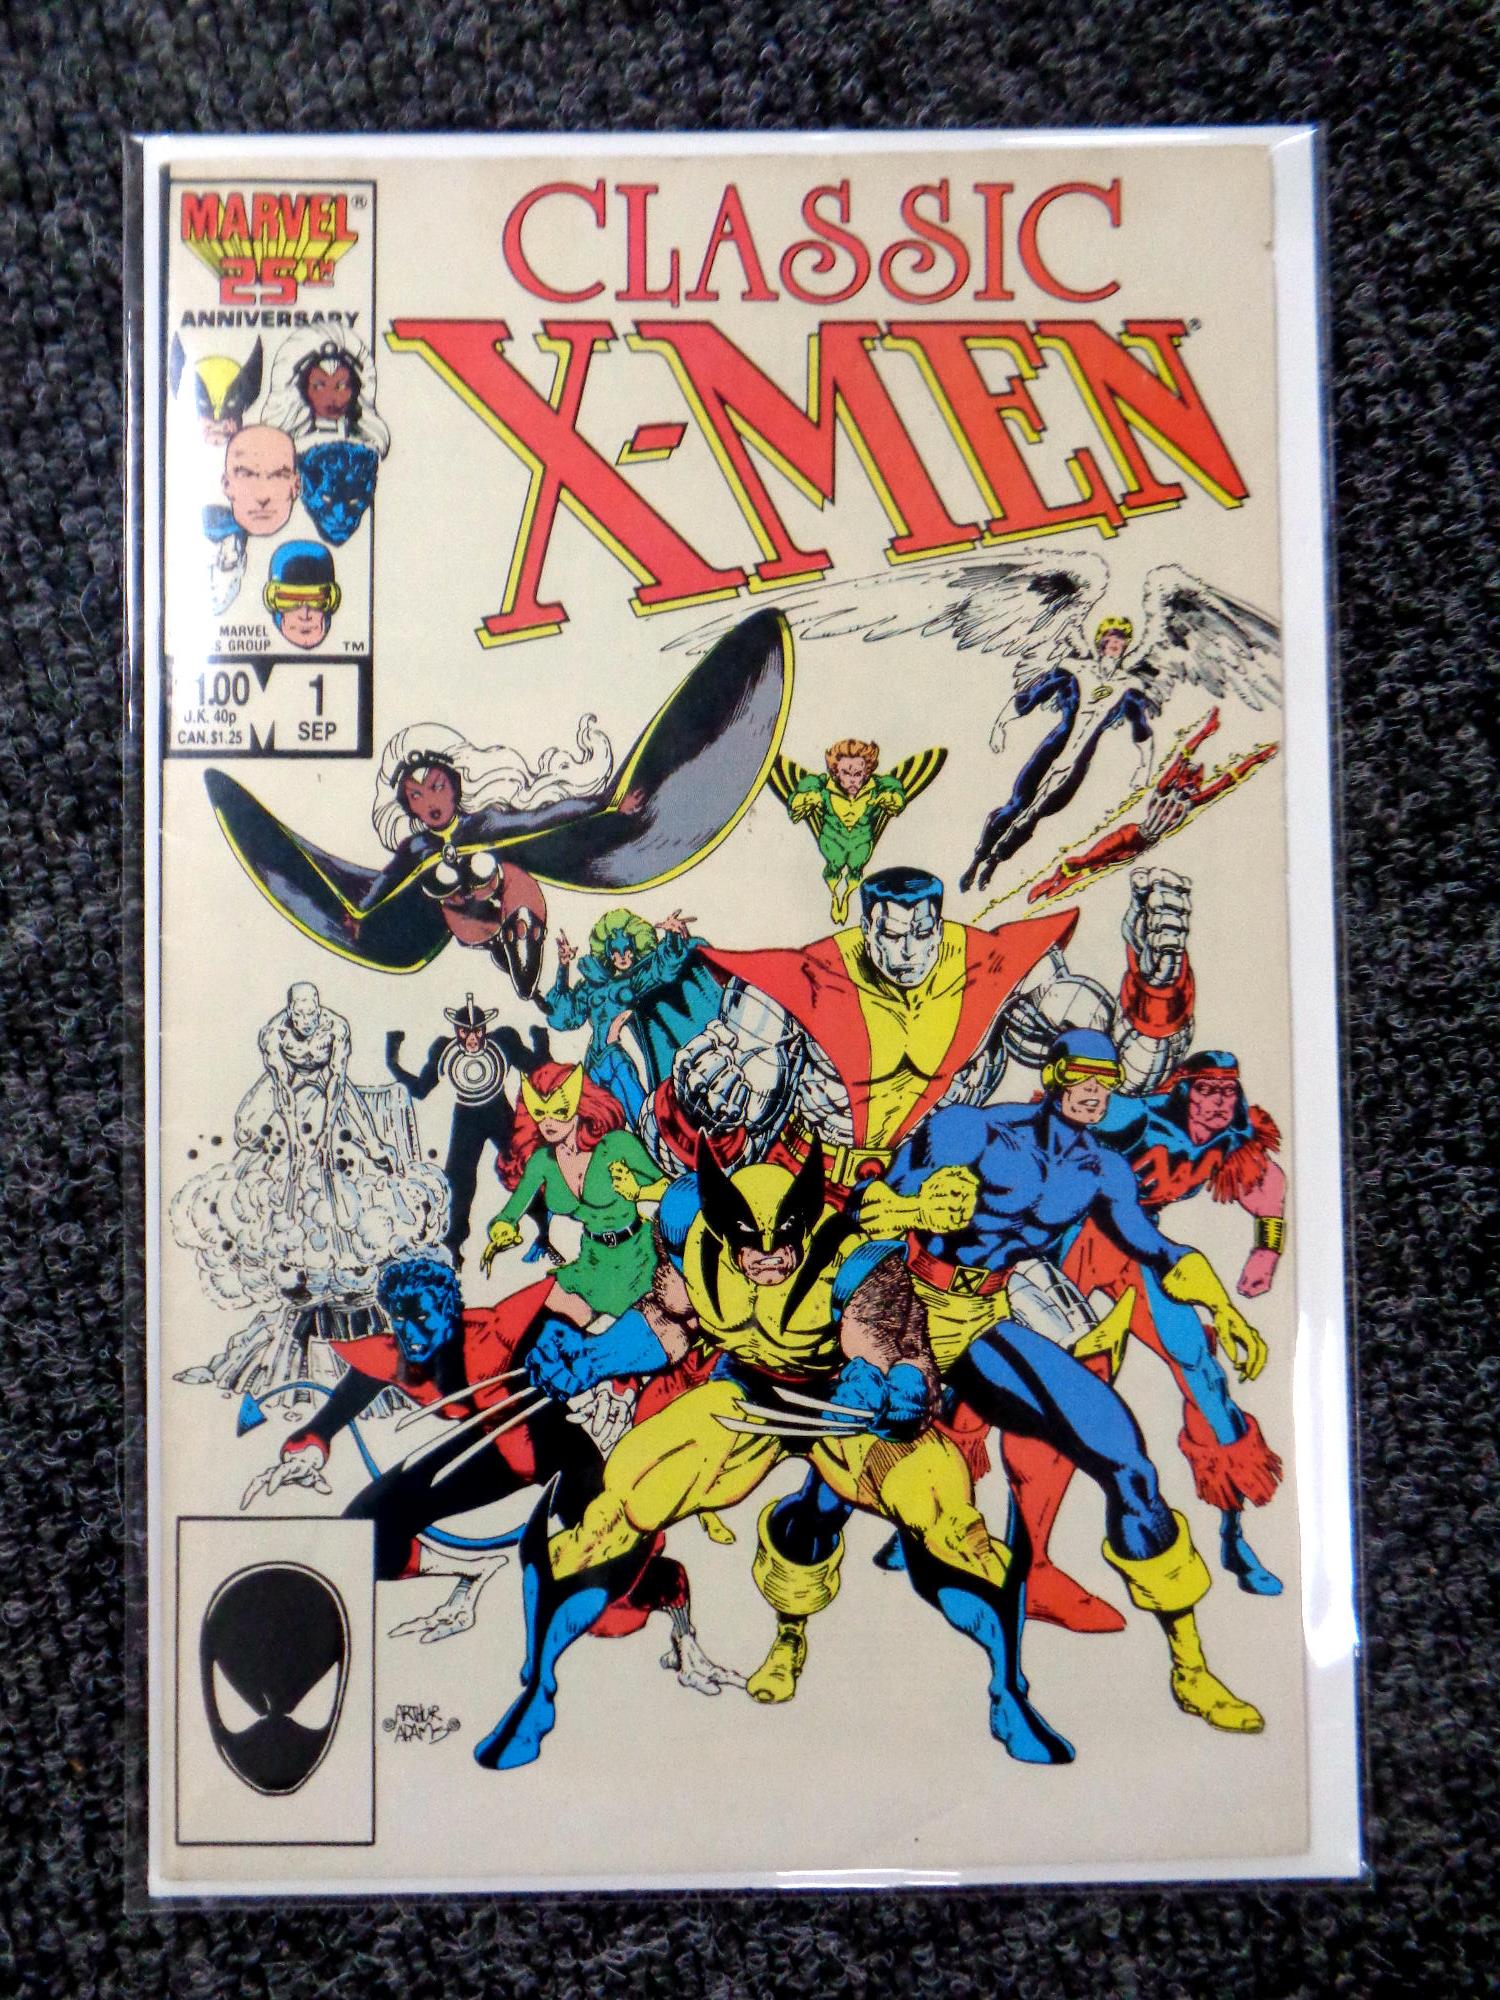 Marvel Classic X-Men #1, 1986. Arthur Adams cover. In very good condition.